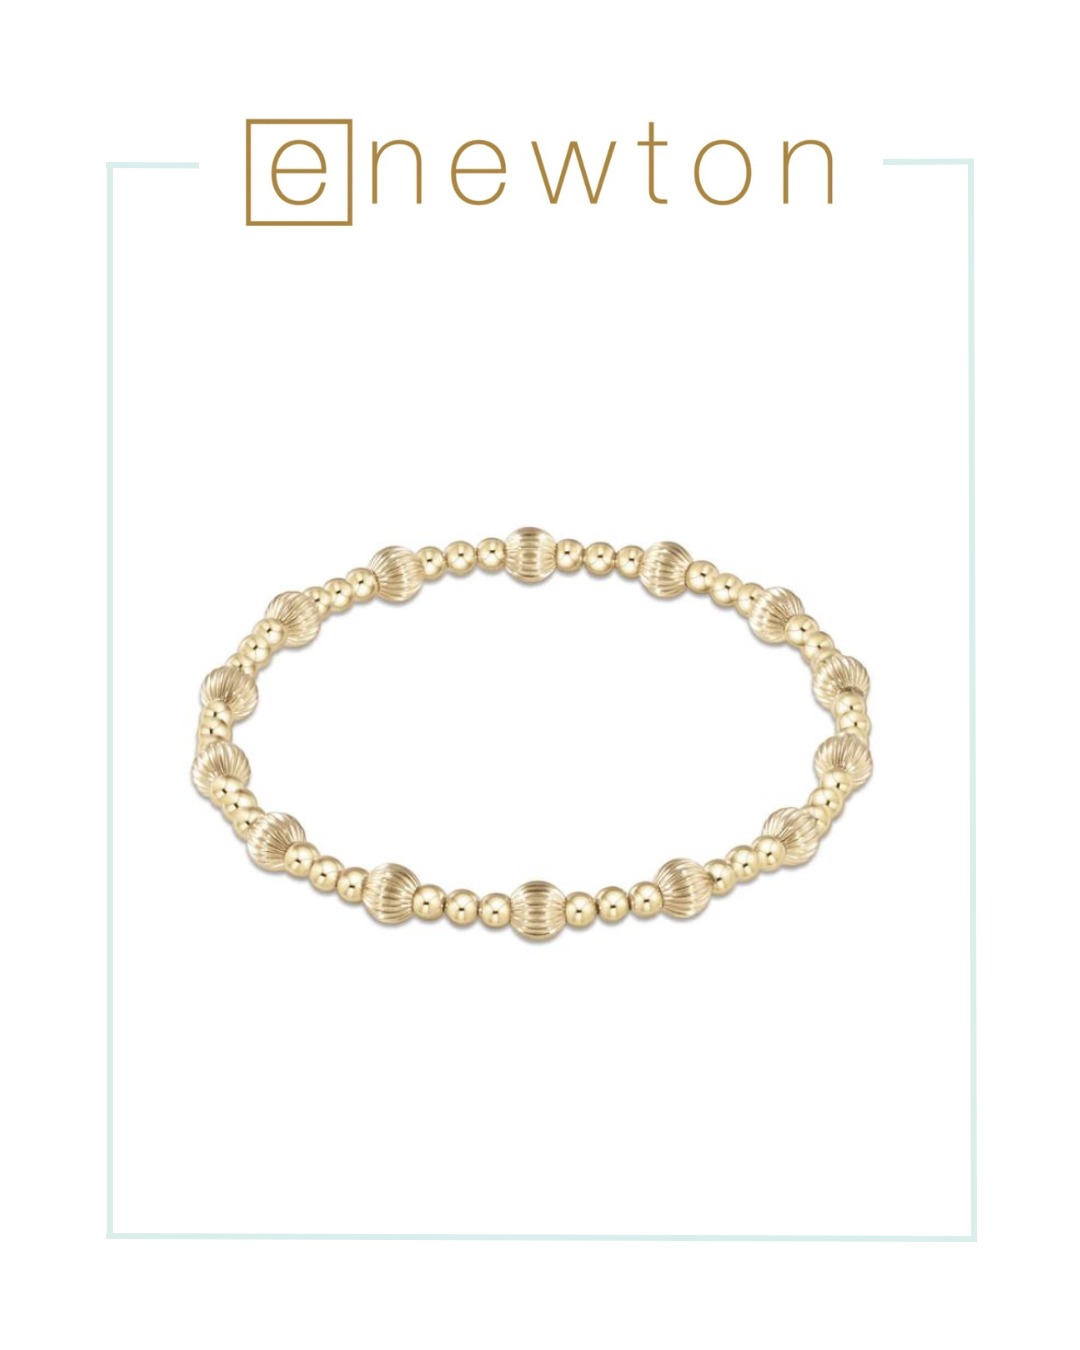 E Newton Dignity Sincerity Pattern 5mm Bead Bracelet - Gold-Bracelets-ENEWTON-The Village Shoppe, Women’s Fashion Boutique, Shop Online and In Store - Located in Muscle Shoals, AL.